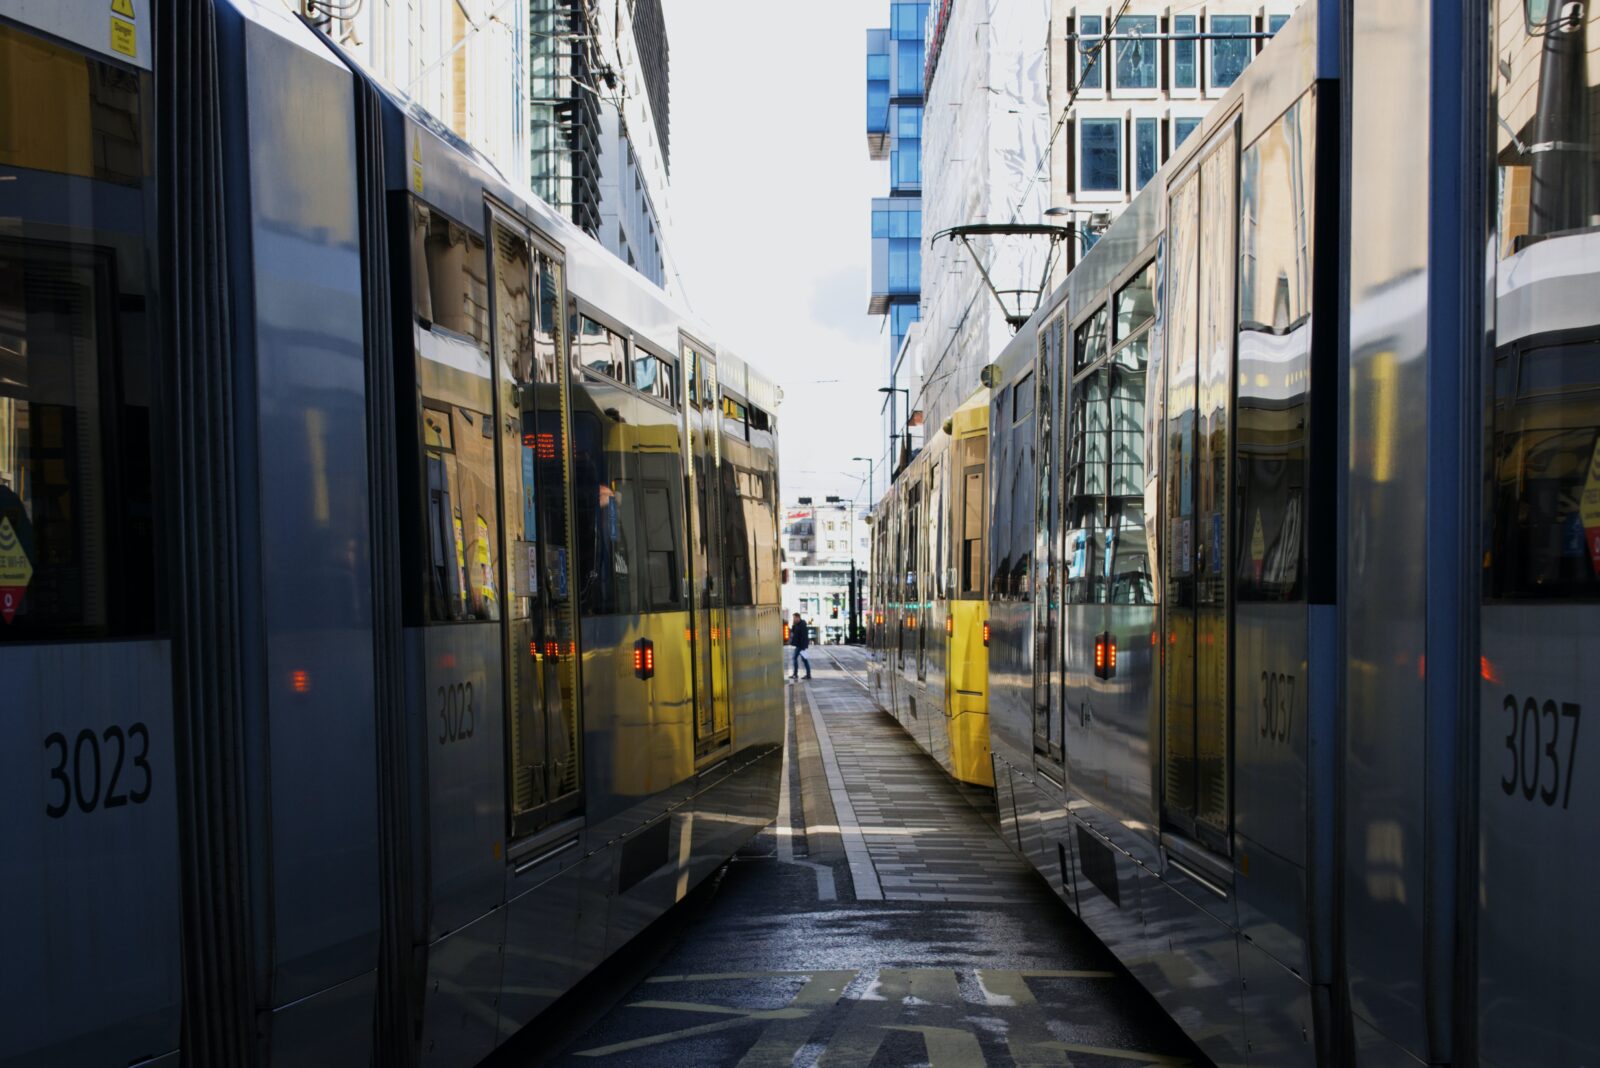 Manchester Metrolink tram workers may strike over Parklife weekend.